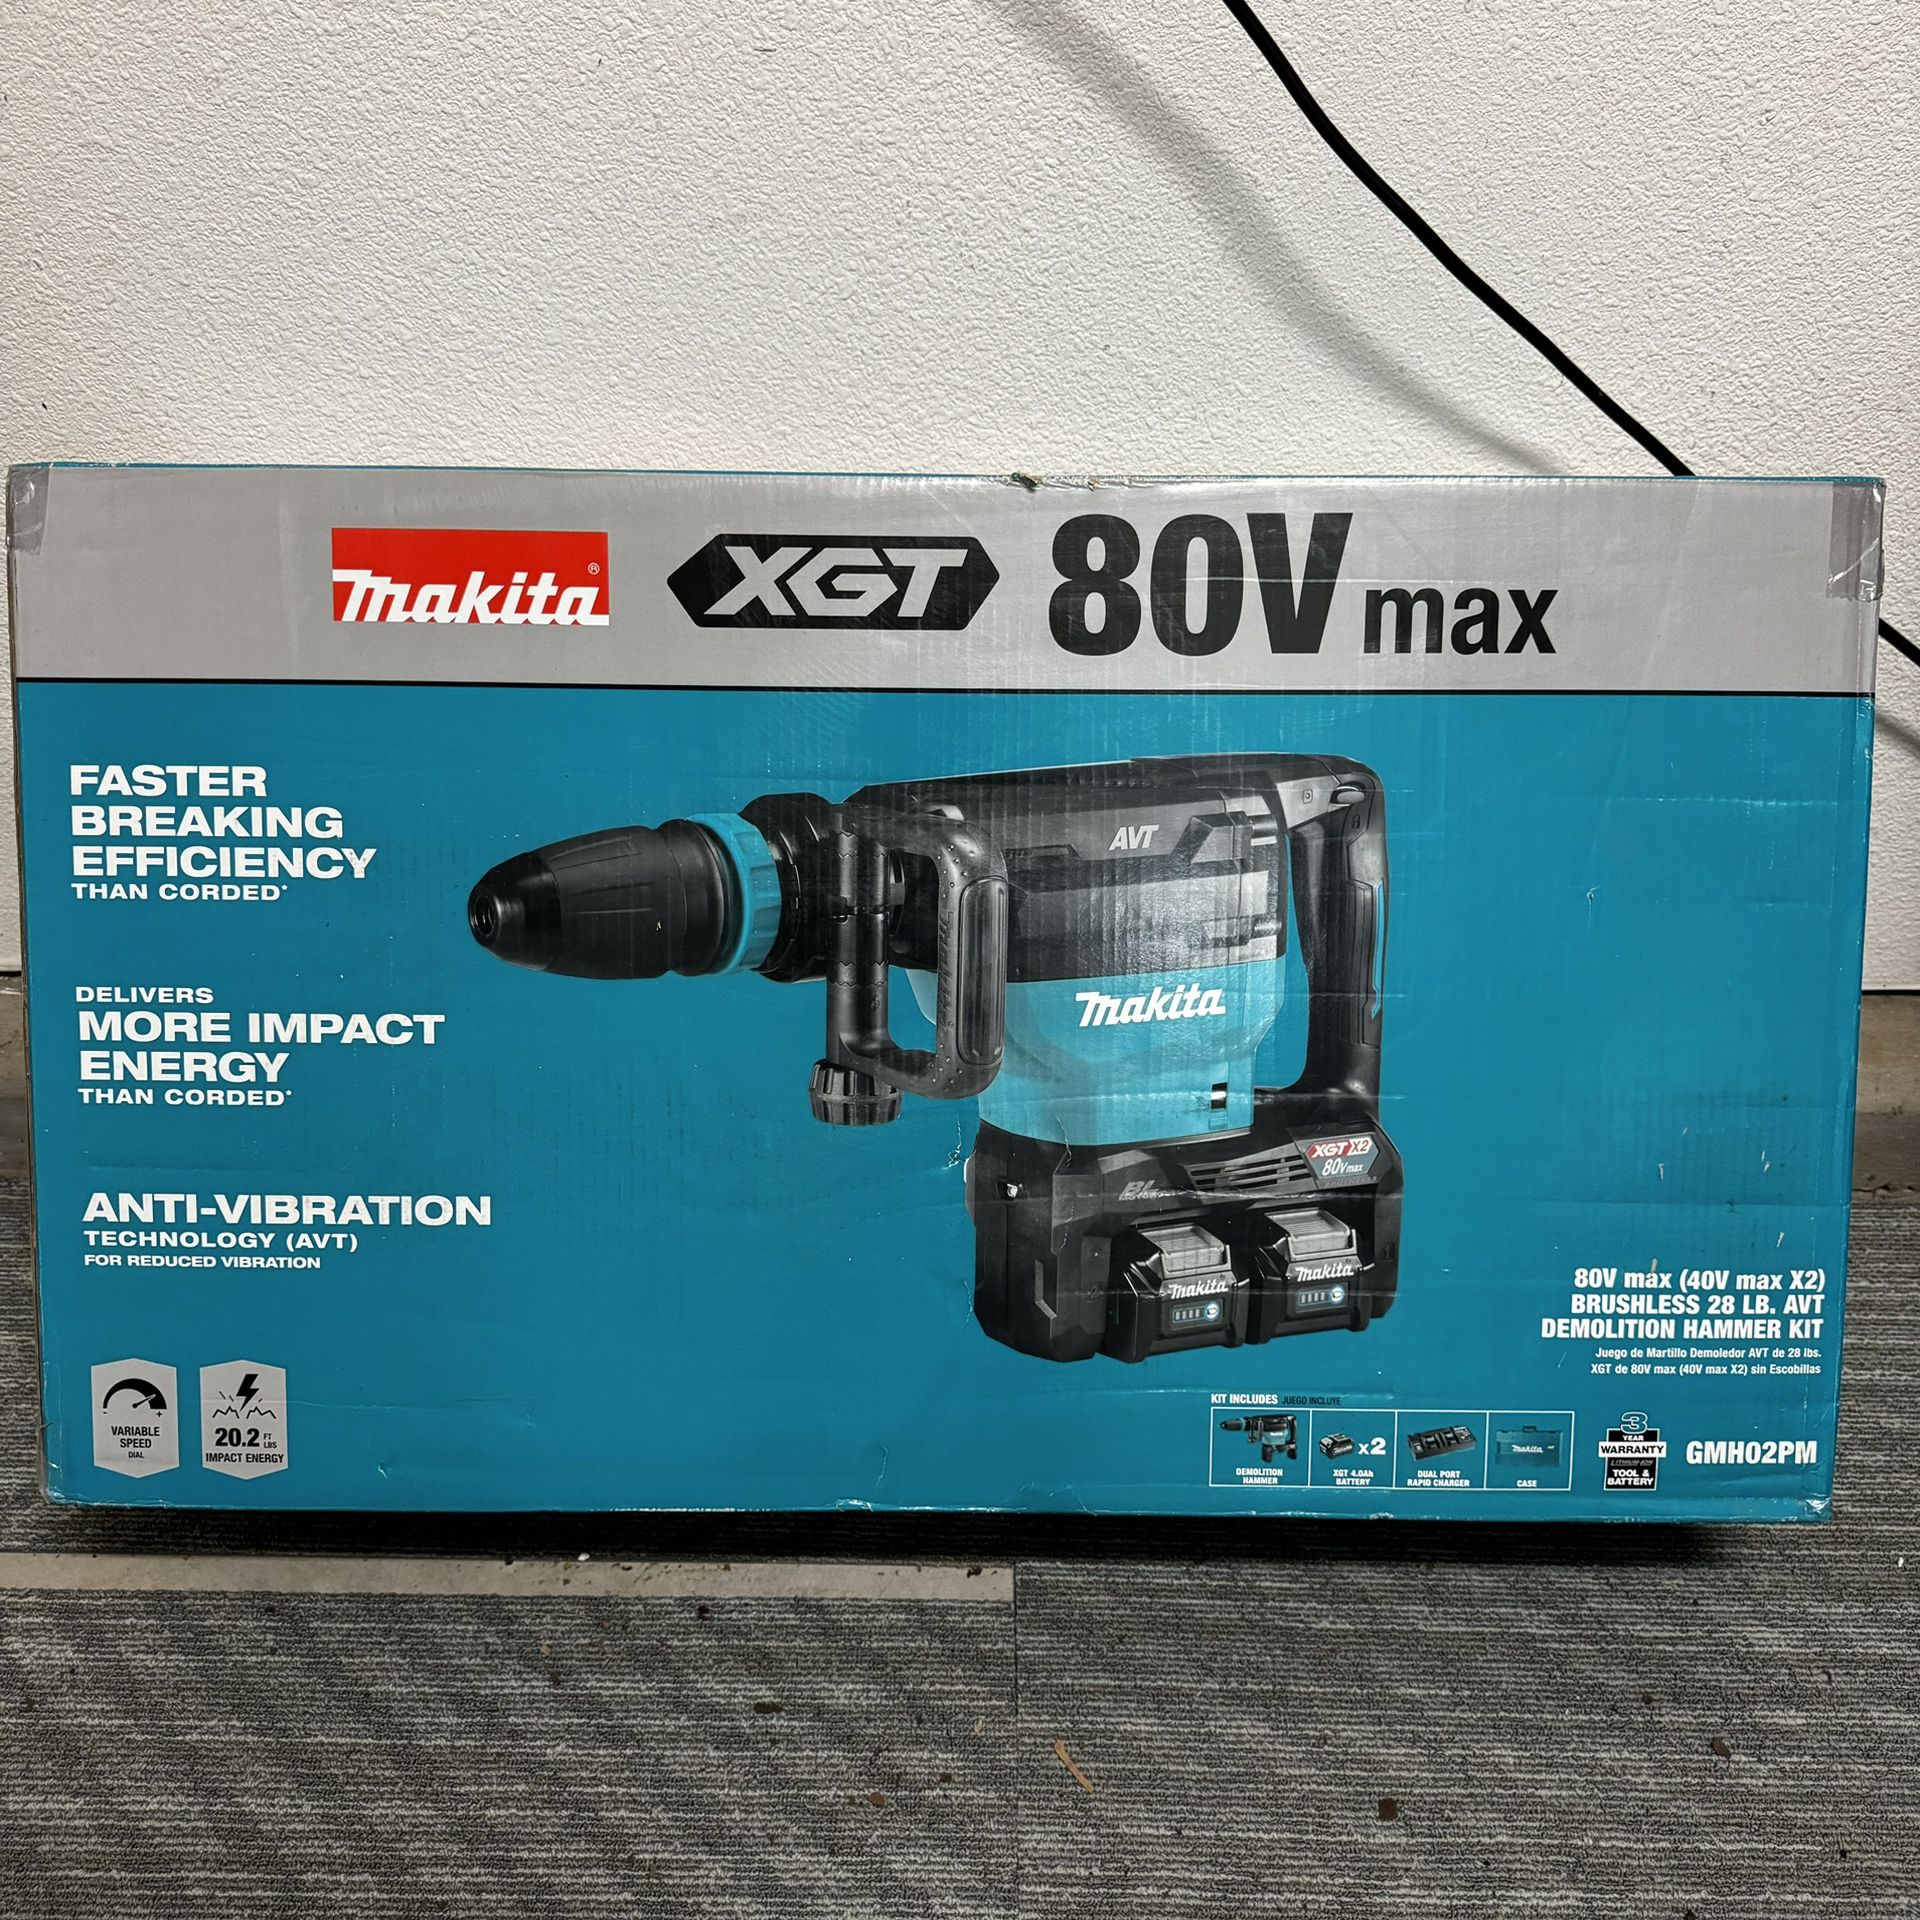 Makita - 40V max X2 XGT 80V max Brushless Cordless 28 lb. AVT Demolition Hammer Kit, AWS 4.0Ah